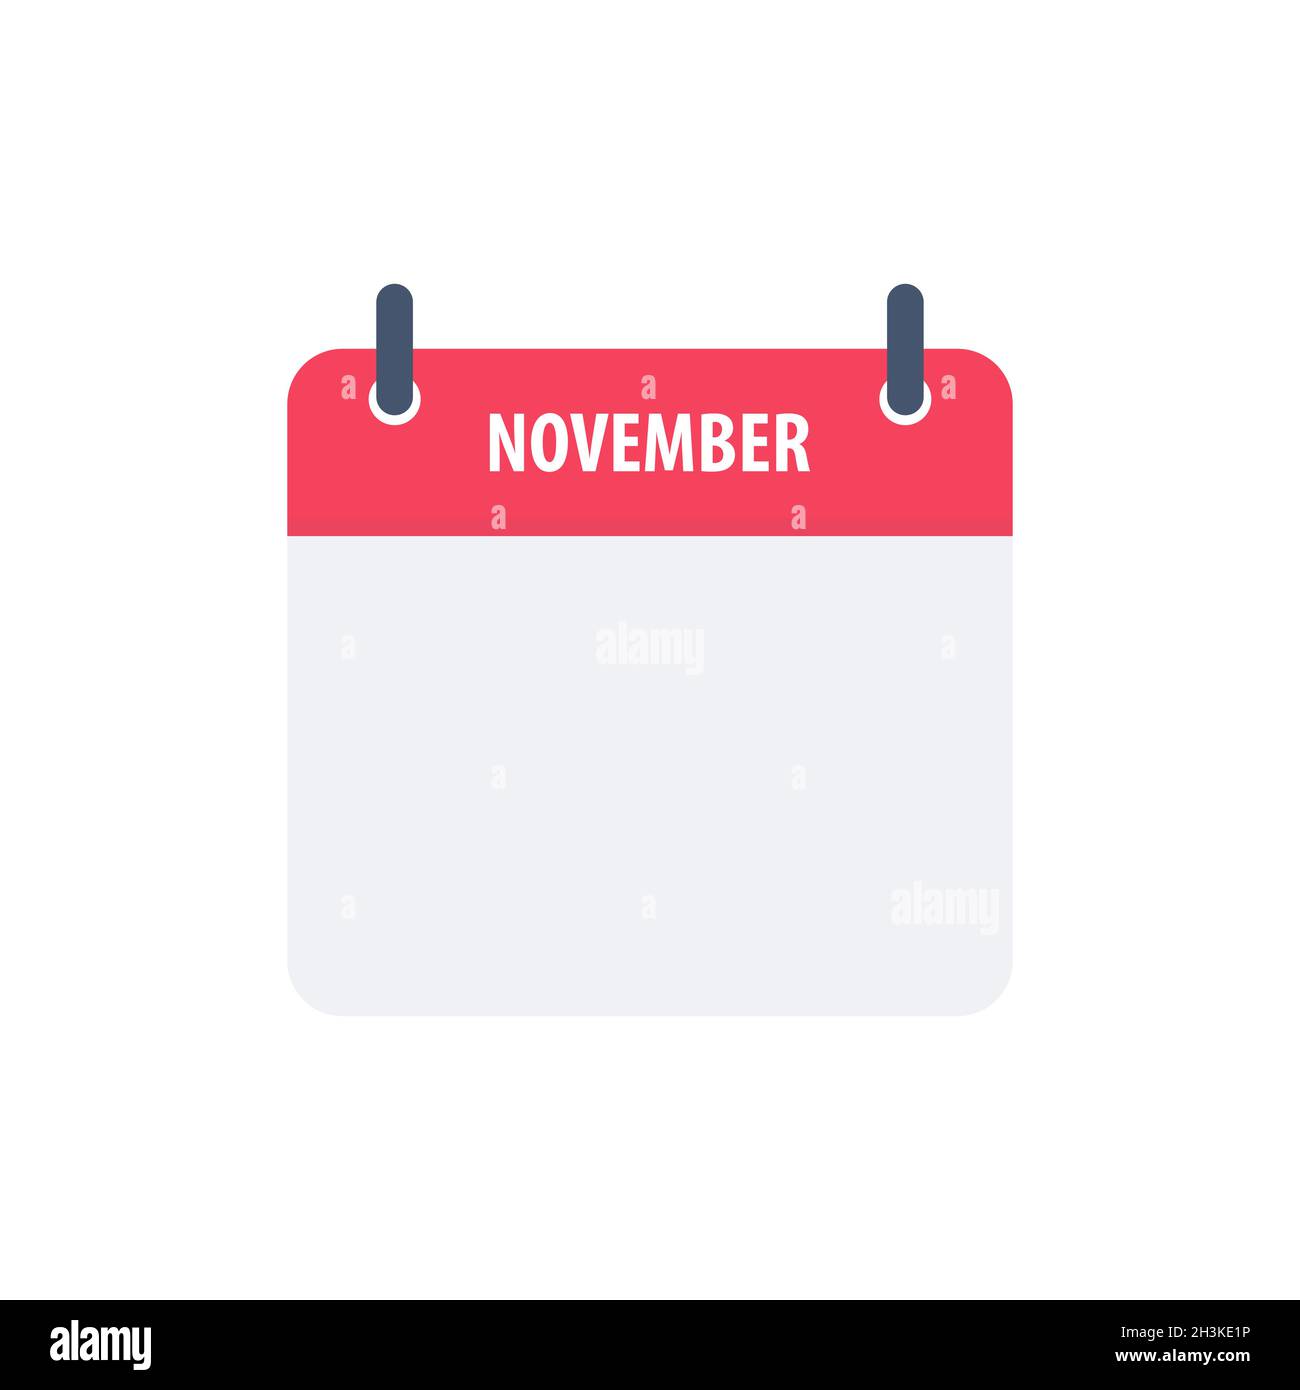 calendar-icon-symbol-november-simple-design-stock-vector-image-art